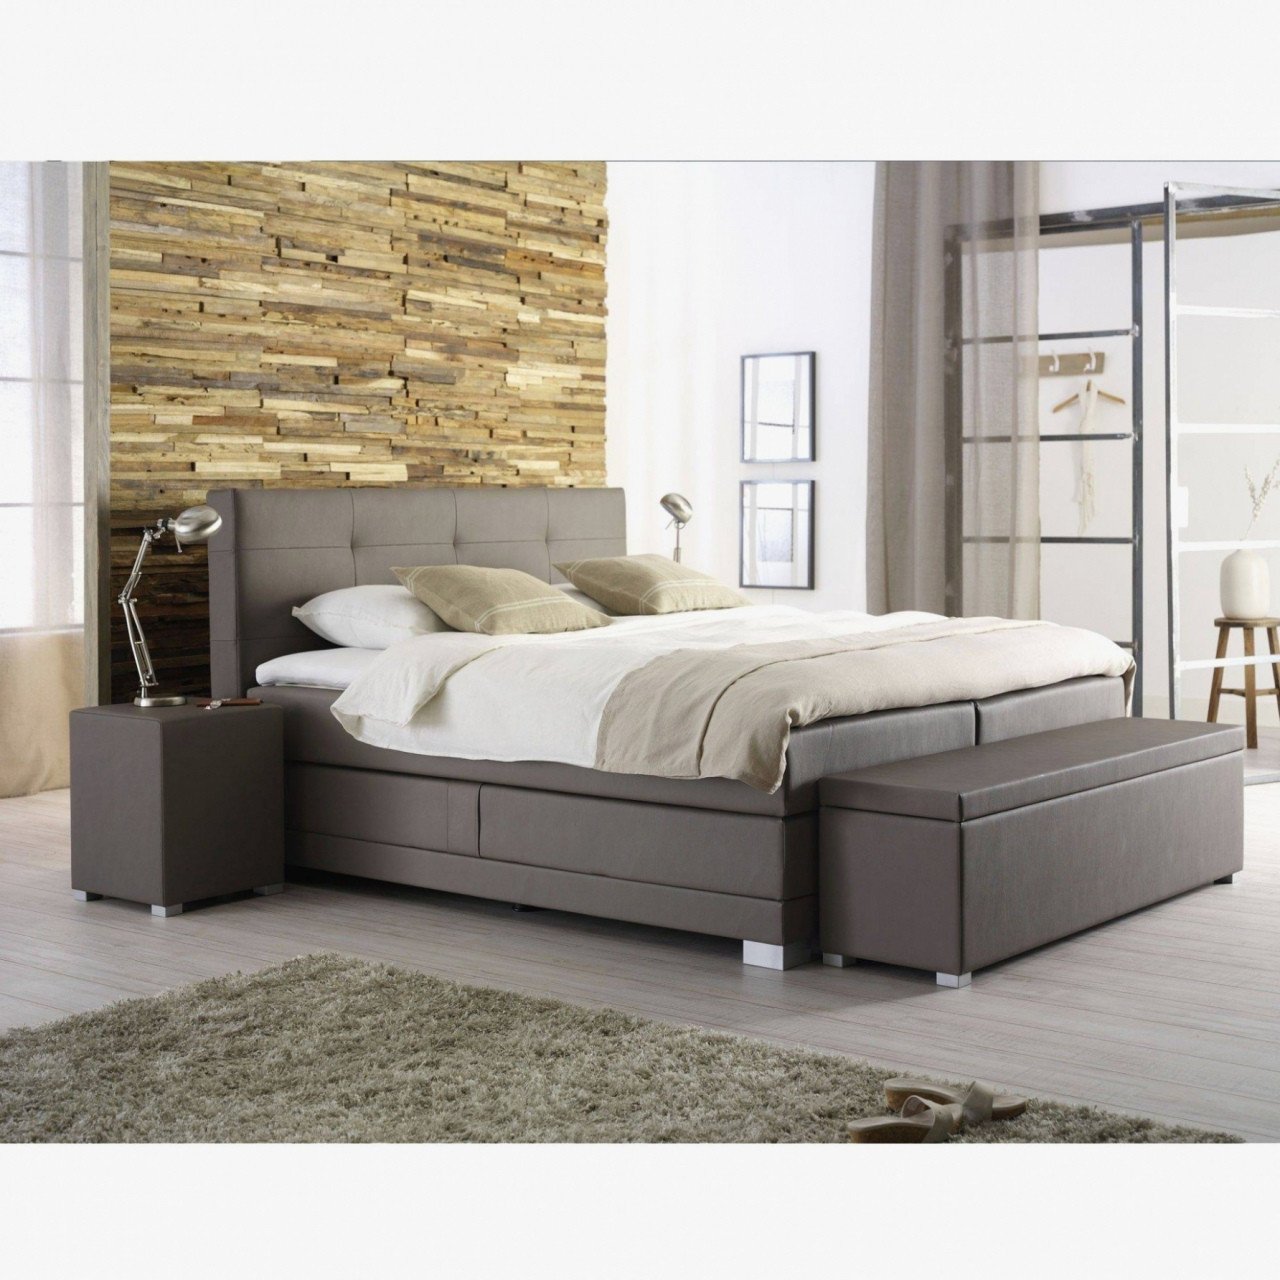 Boy Twin Bedroom Set Elegant Bed with Drawers Under — Procura Home Blog